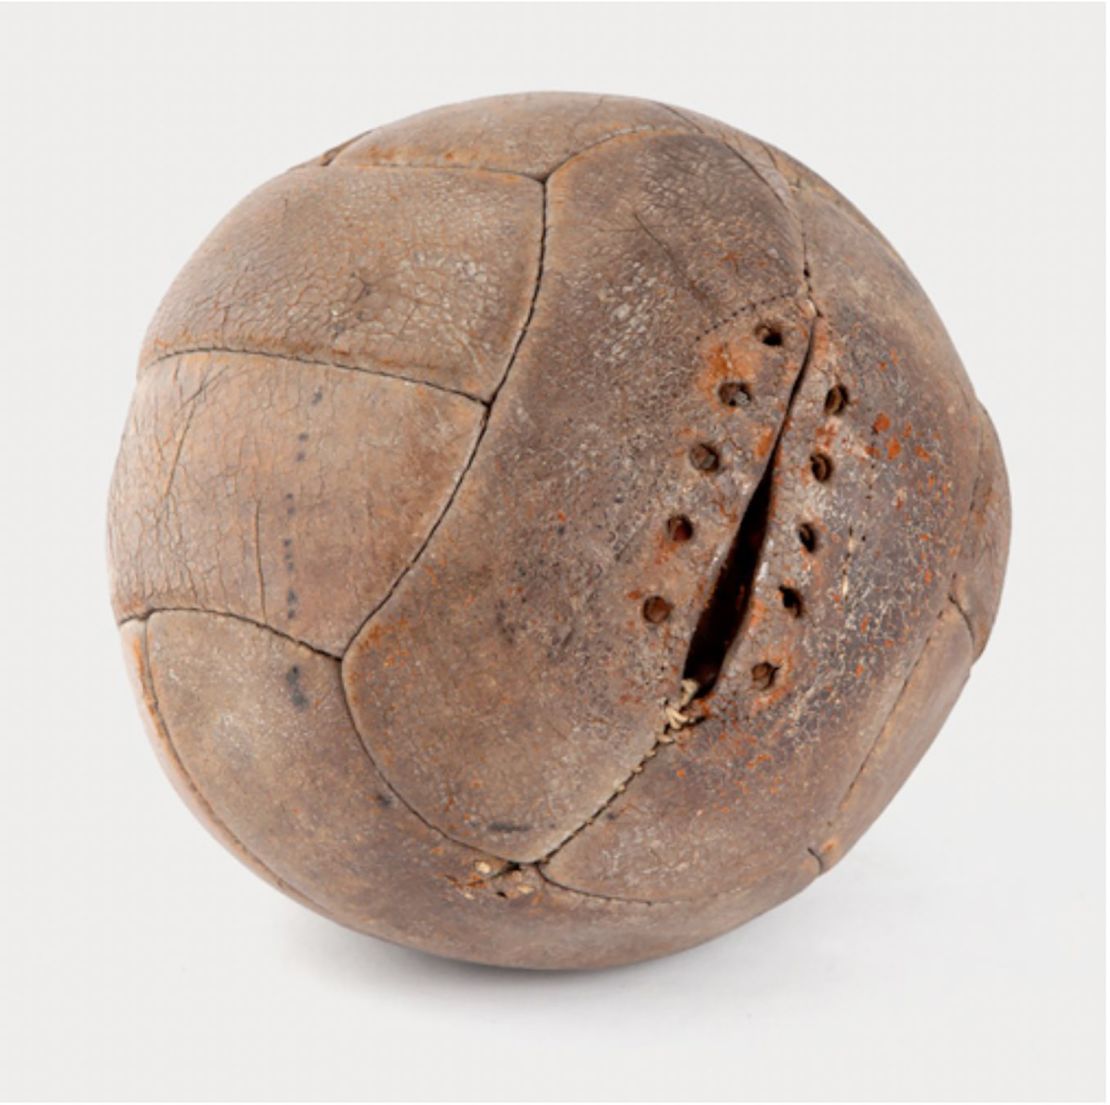 world cup soccer balls history